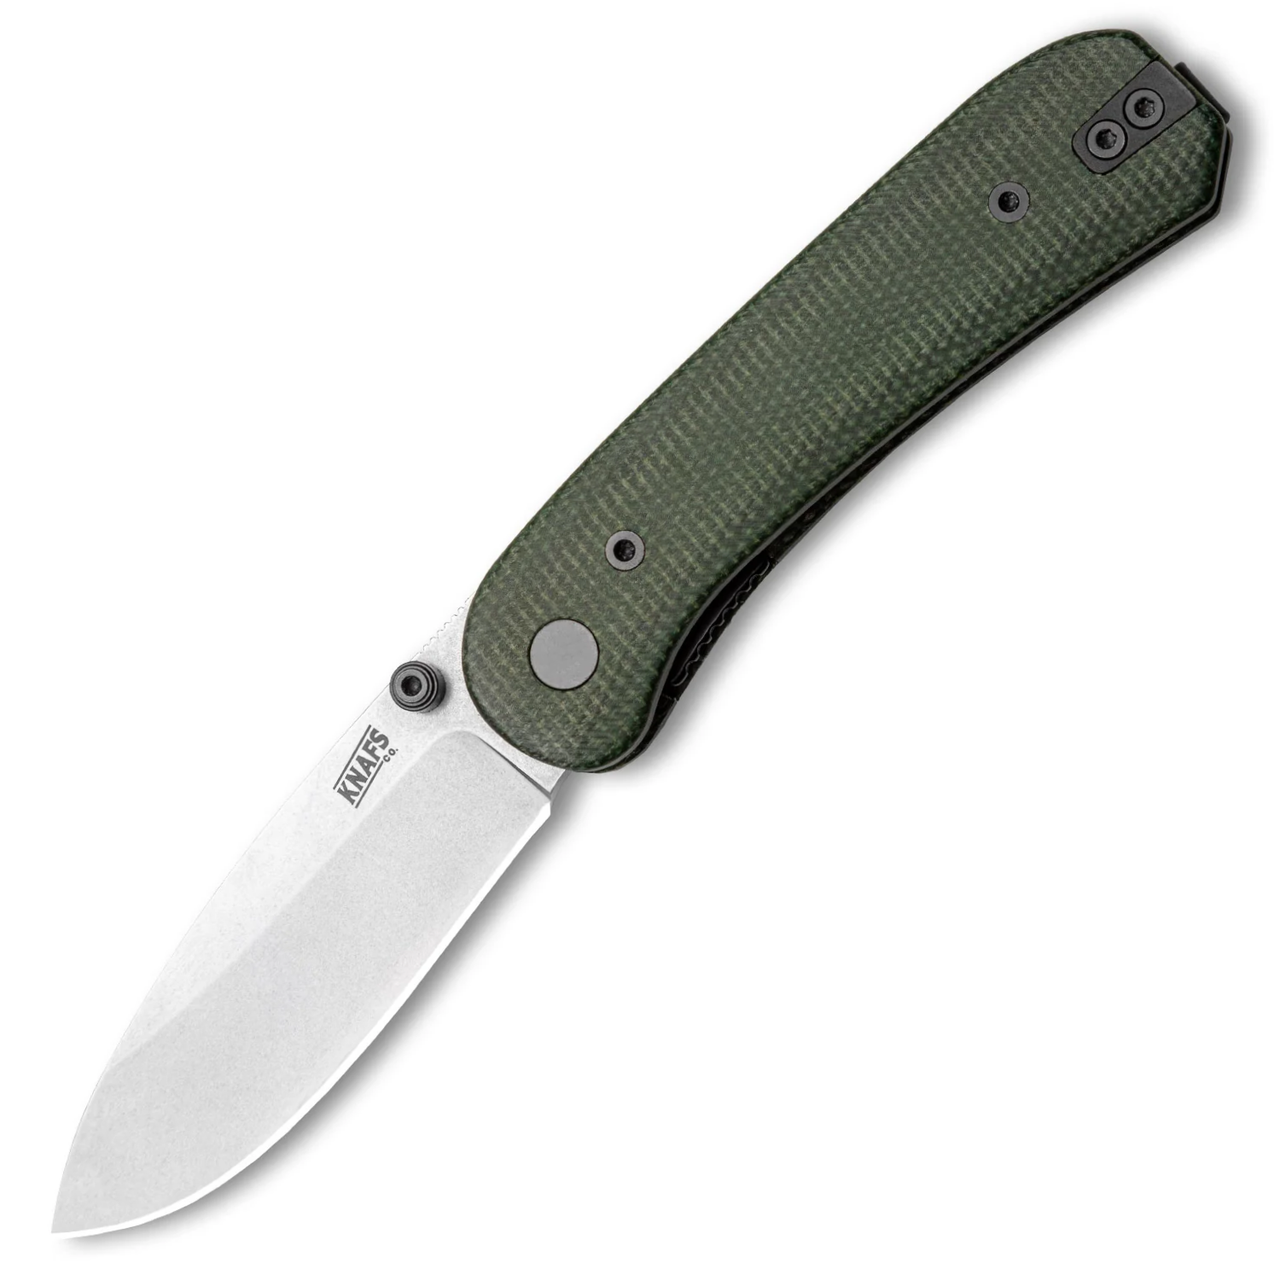 KNAFS Lander EDC Knife (KNAFS-00156) 2.75" Stonewash 14C28V Drop Point Plain Blade, Green Contoured Micarta Handle with Fast Swap Scales